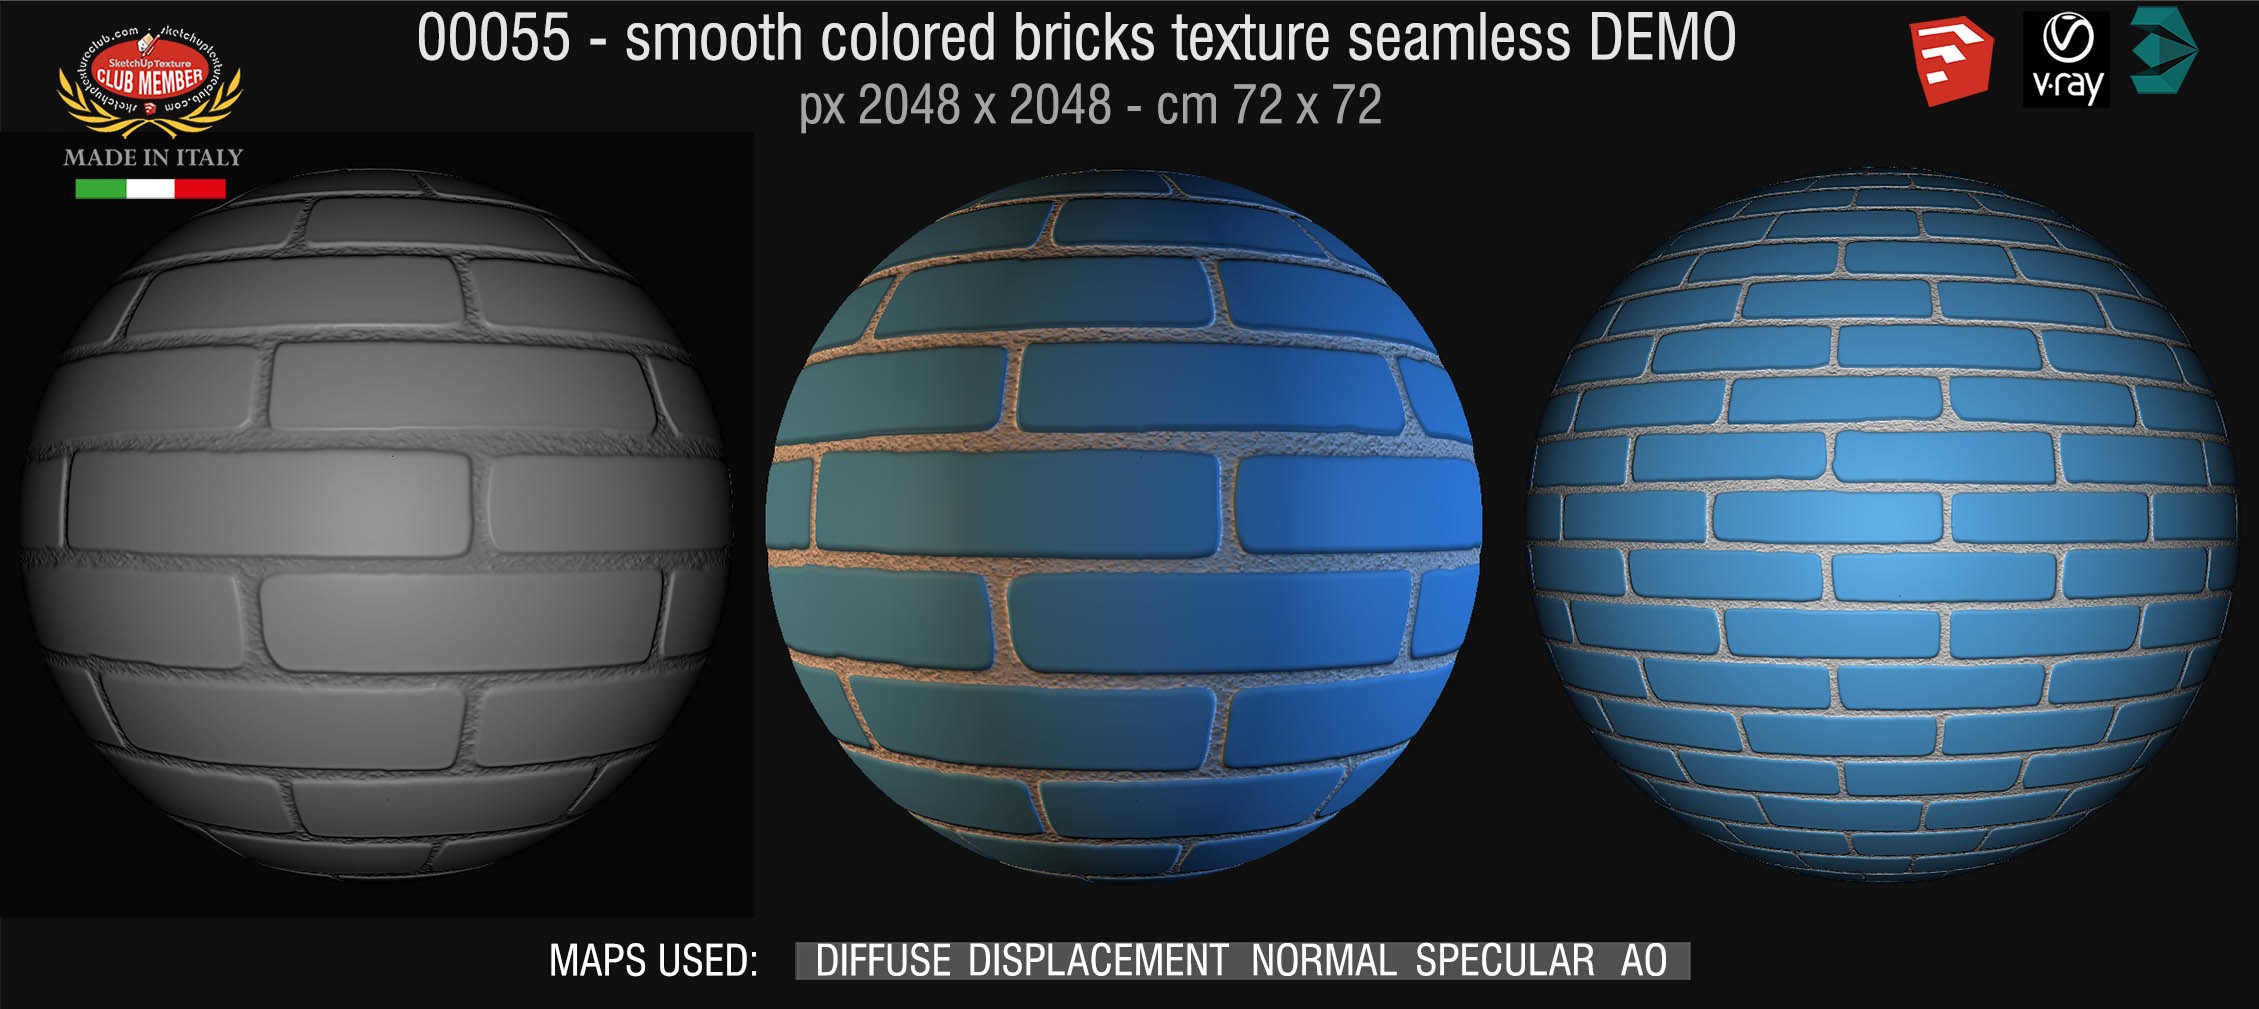 00055 smooth colored bricks texture seamless + maps DEMO